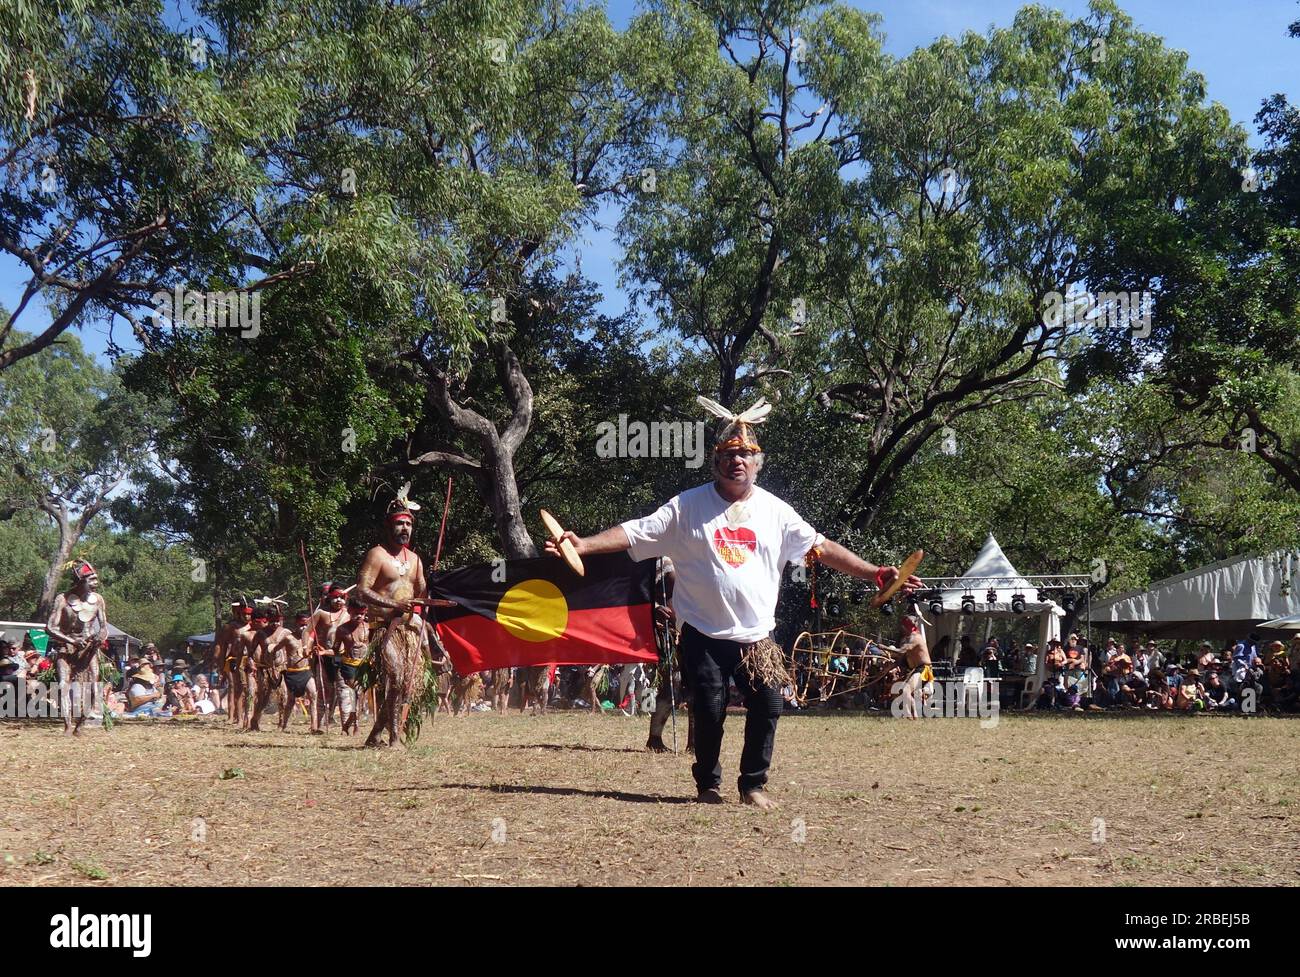 Indigenous Leader offering voice, treaty, truth, at Laura Quinkan Indigenous Dance Festival, Cape York Peninsula, Queensland, Australia. No MR or PR Stock Photo